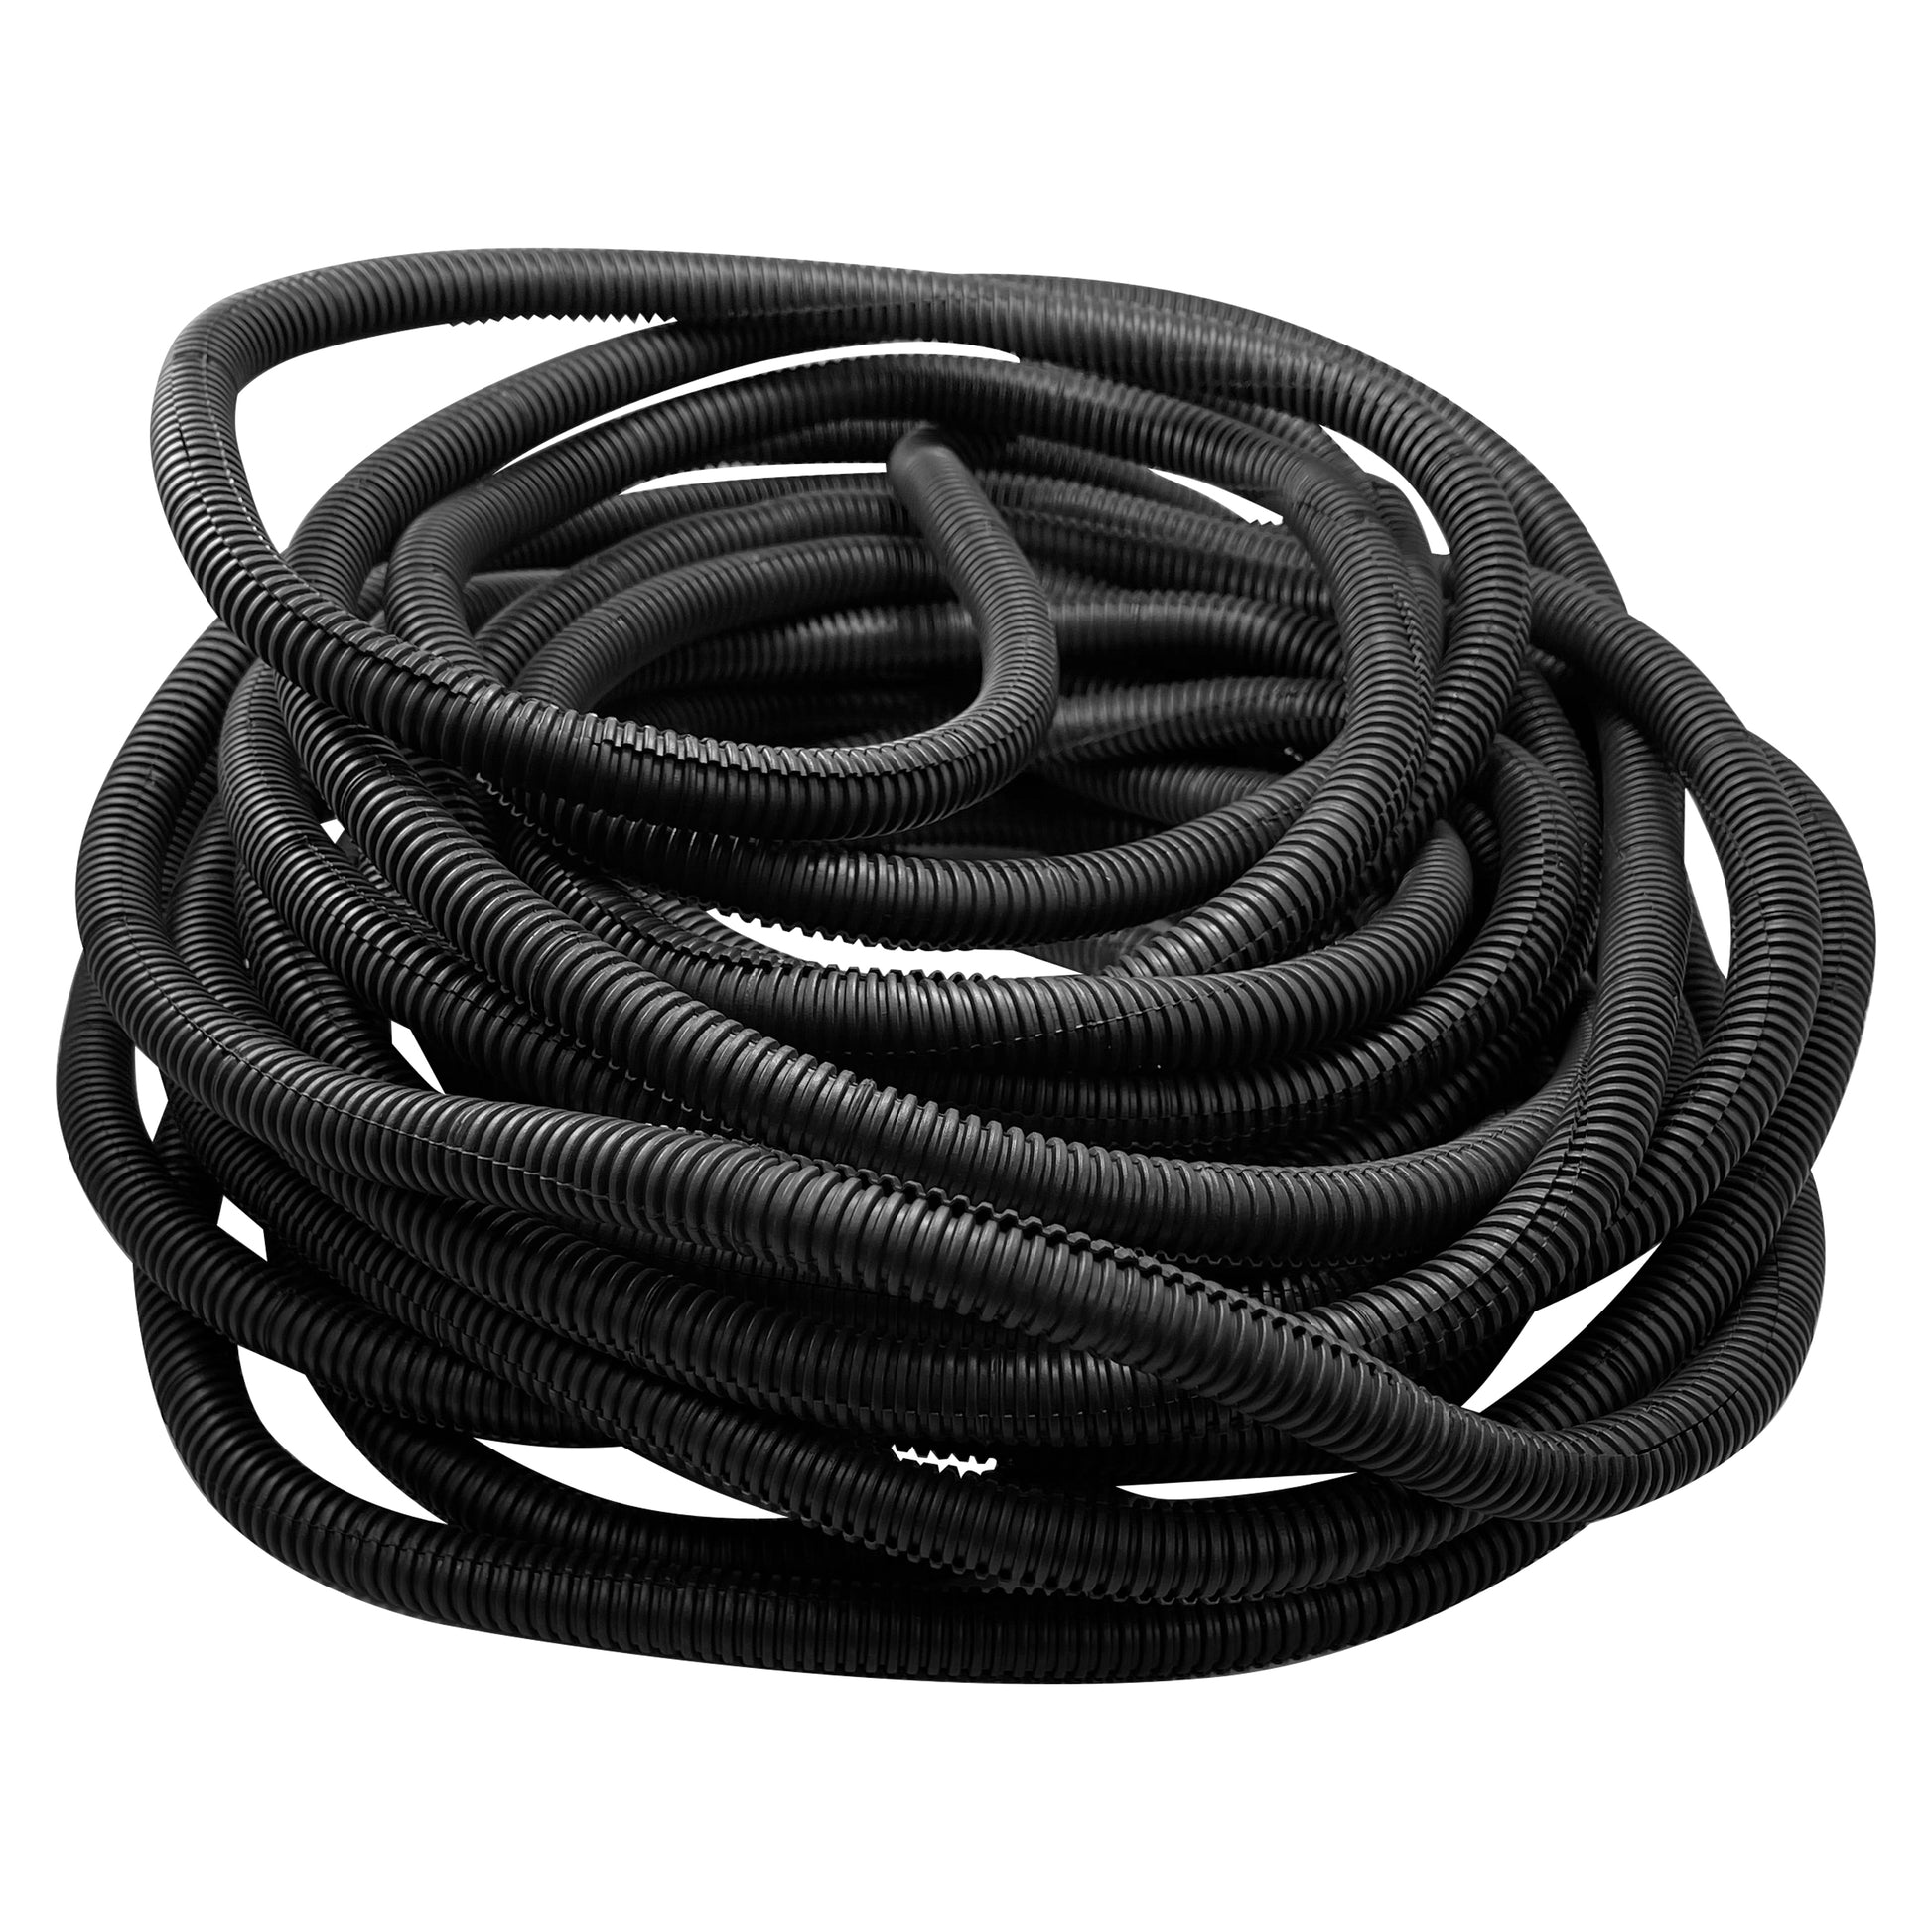 Auveco 14202 Black Nylon Wire Loom 3/8" I.D x 9/16" O.D - USA - 50 FT